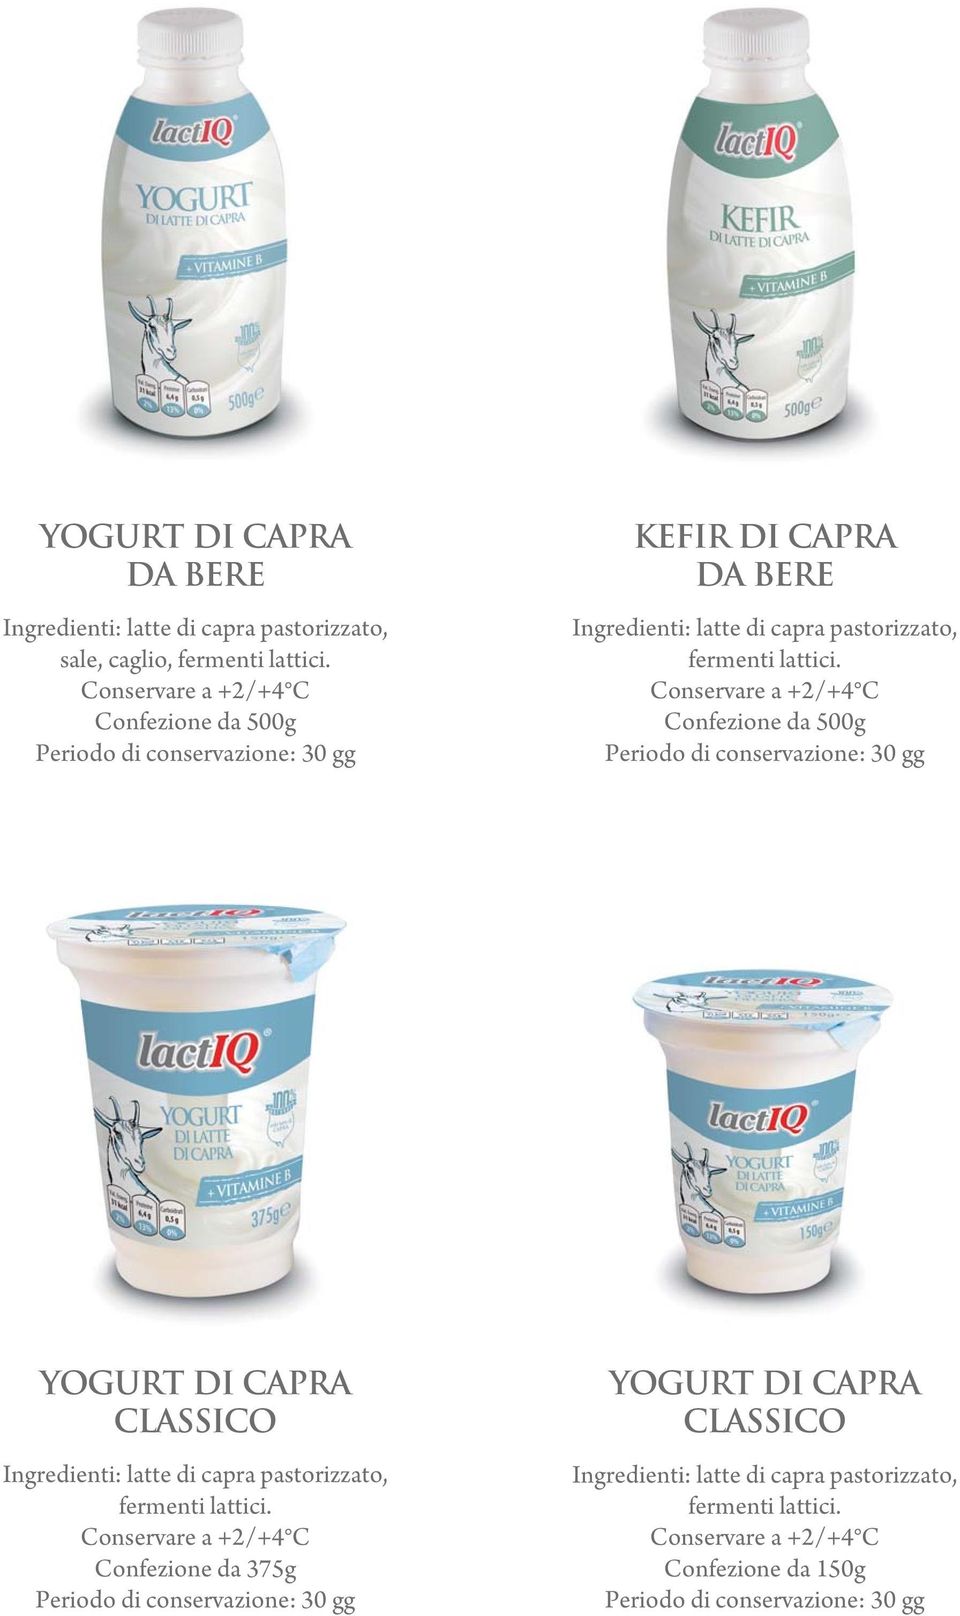 Confezione da 500g Periodo di conservazione: 30 gg YOGURT DI CAPRA CLASSICO fermenti lattici.